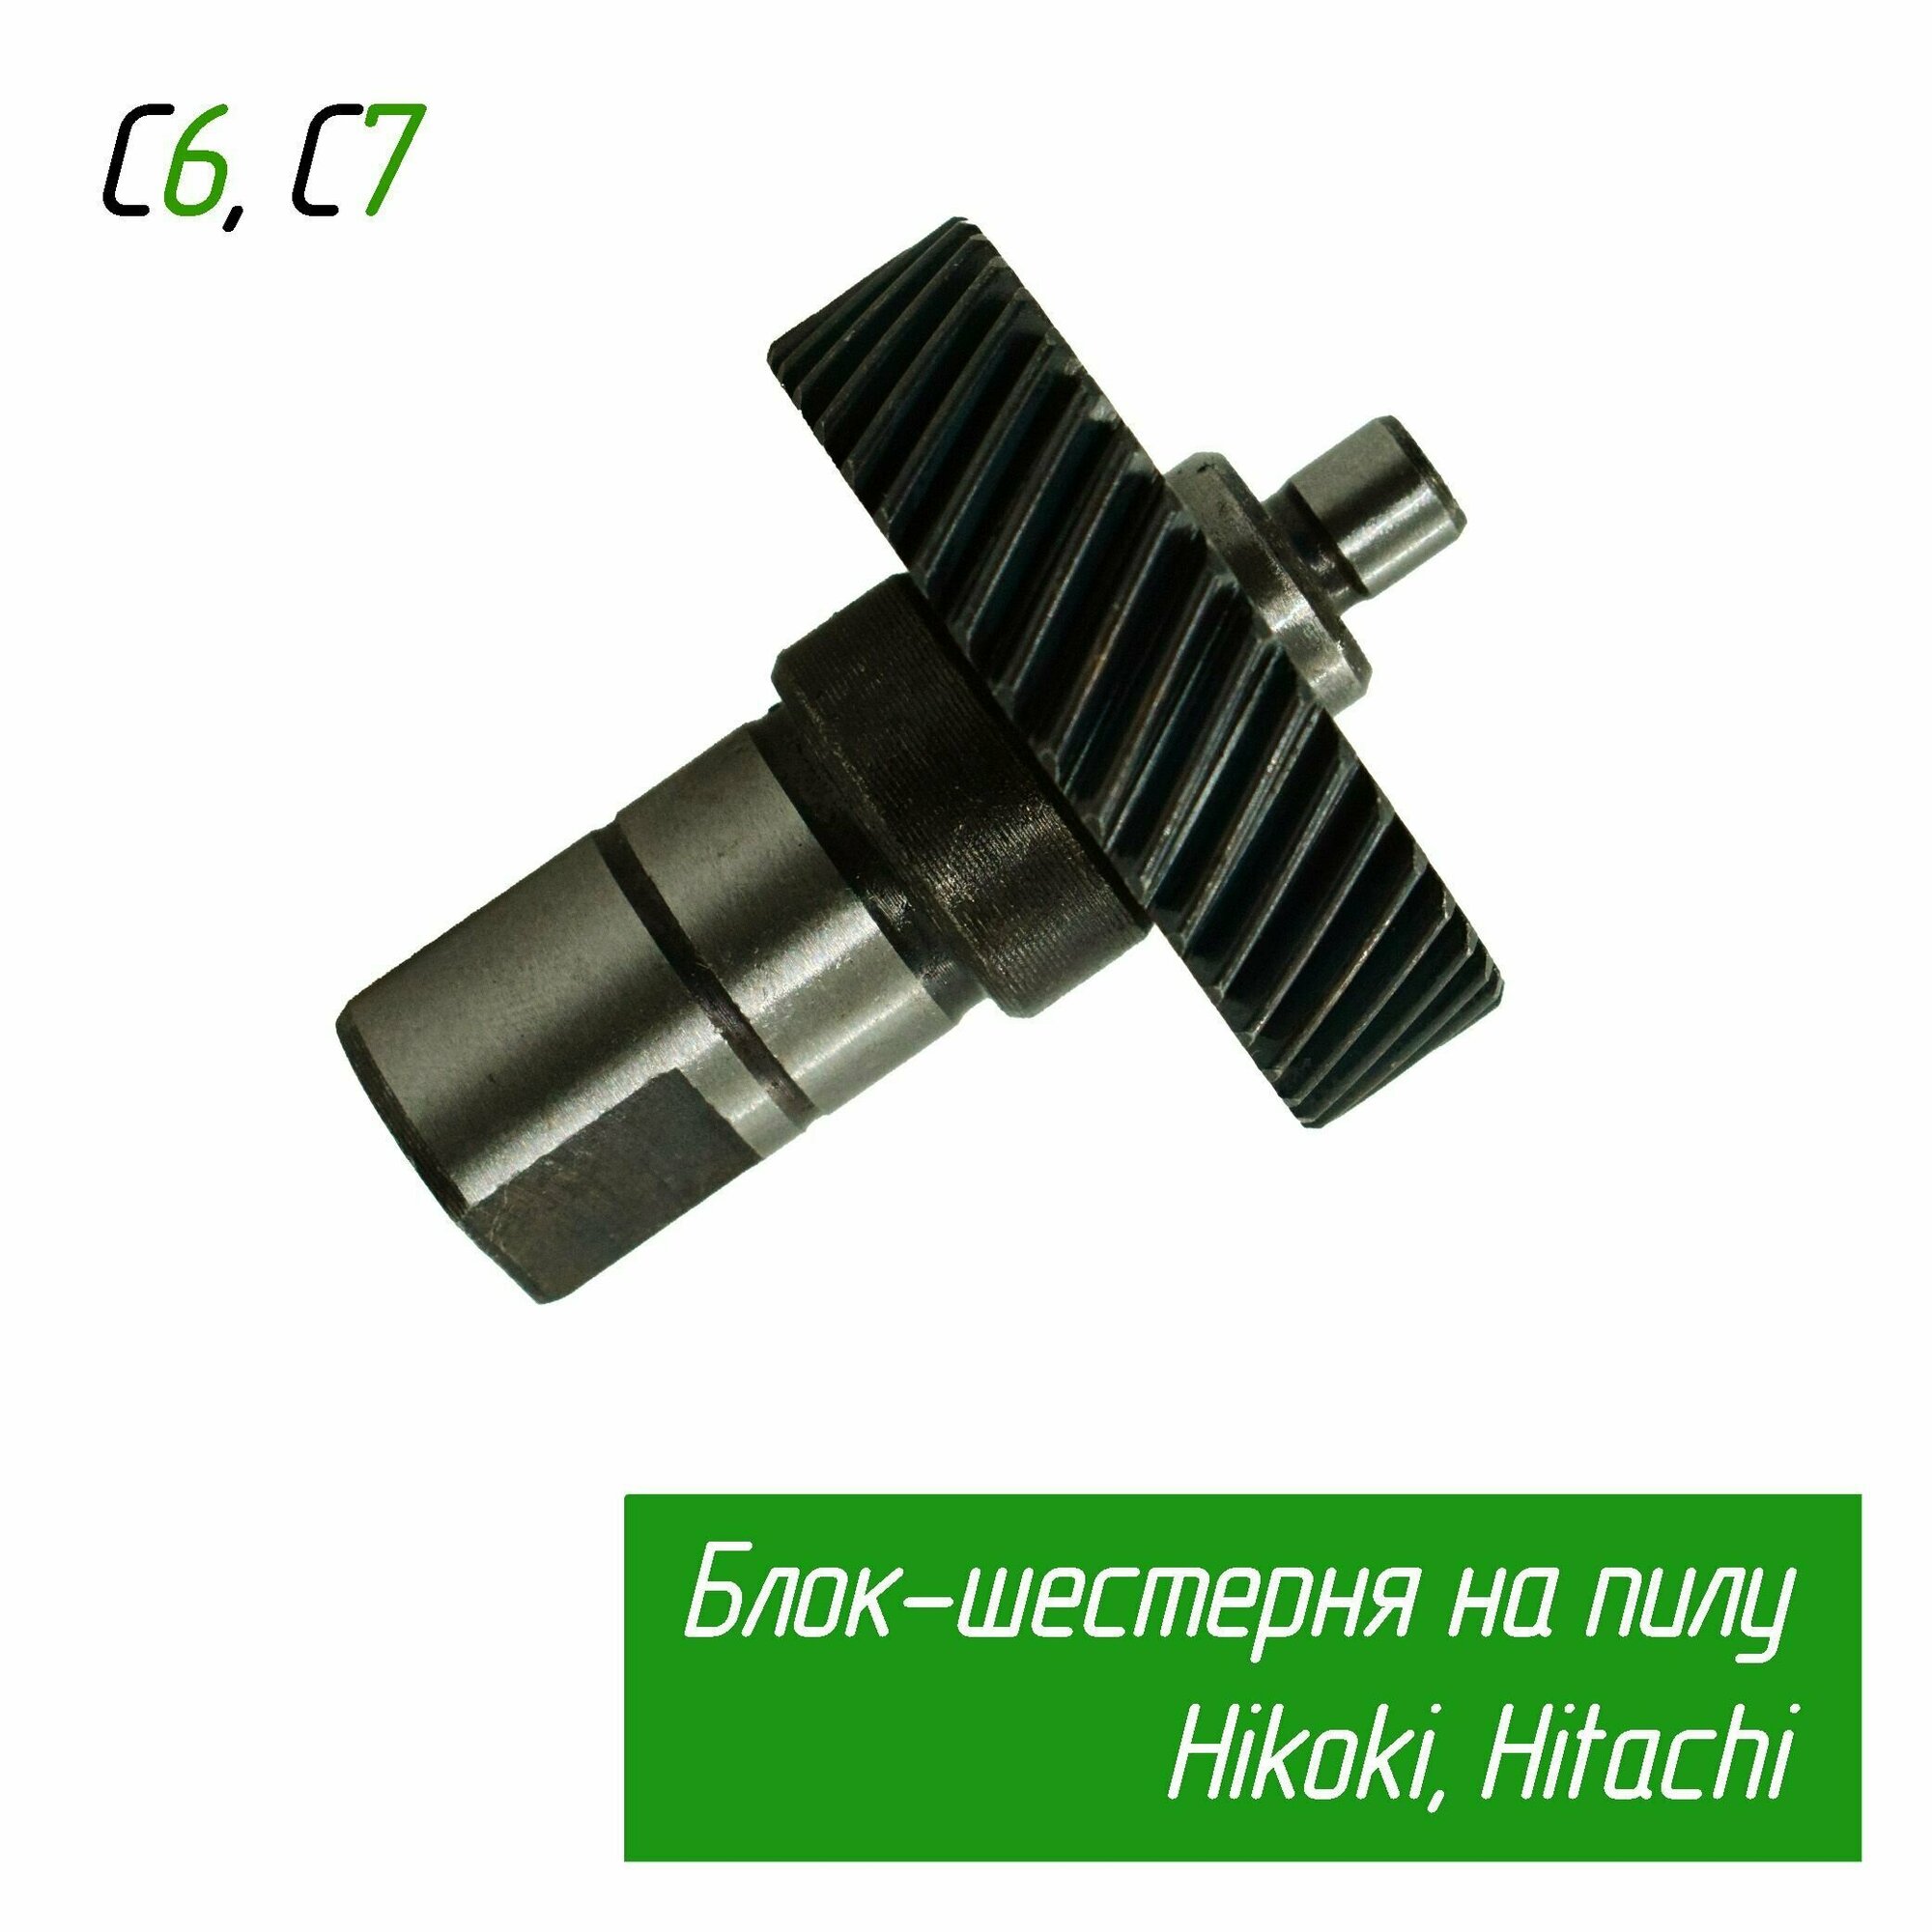 Блок шестерня шпиндель для циркулярной пилы Hikoki подходит для циркулярной пилы Hitachi (Хитачи) 322088 C6MFA C7MFA AEZ